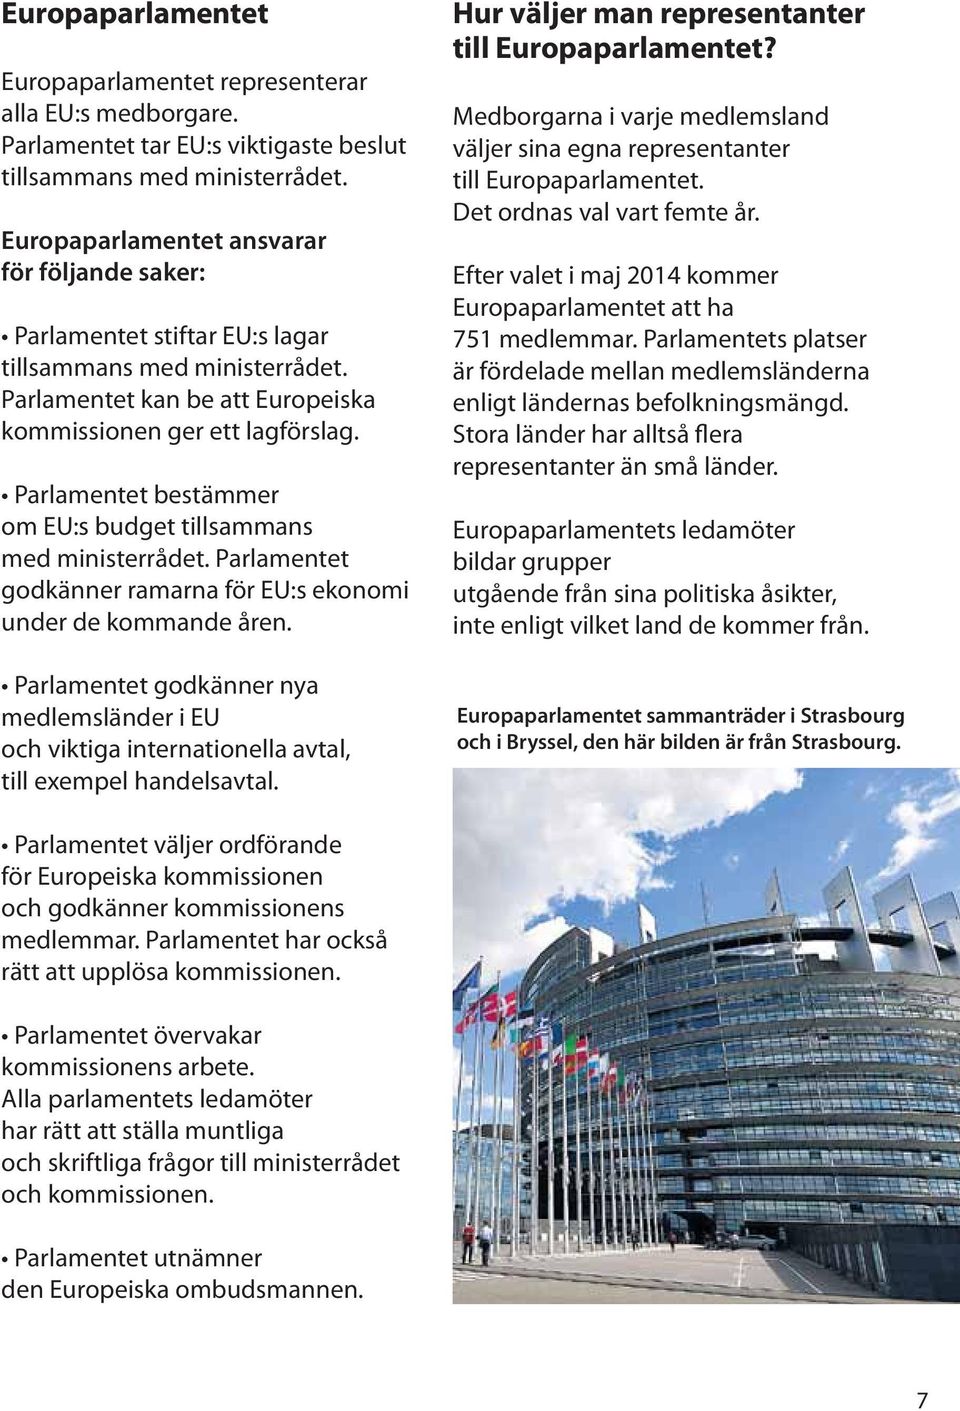 Parlamentet besta mmer om EU:s budget tillsammans med ministerrådet. Parlamentet godka nner ramarna fo r EU:s ekonomi under de kommande åren.